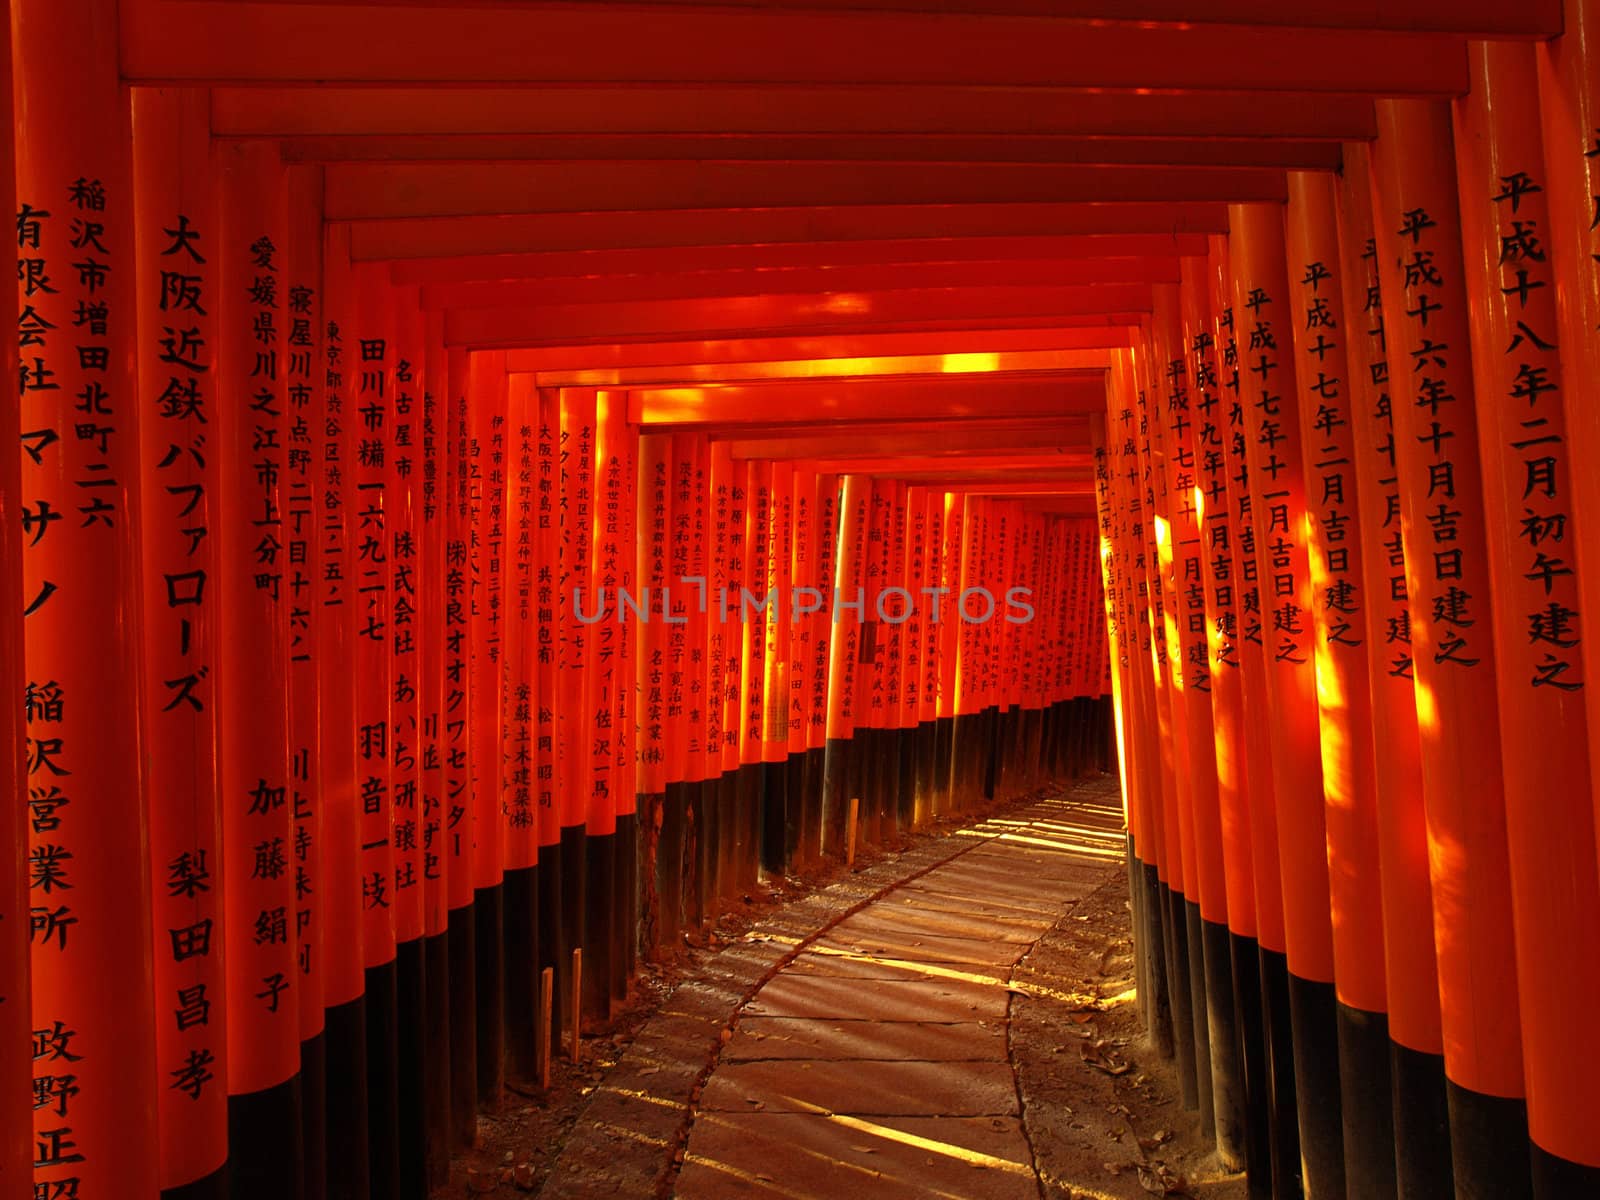 Pathway under the torii gate at Fushimi Inari Shrine in Kyoto, Japan